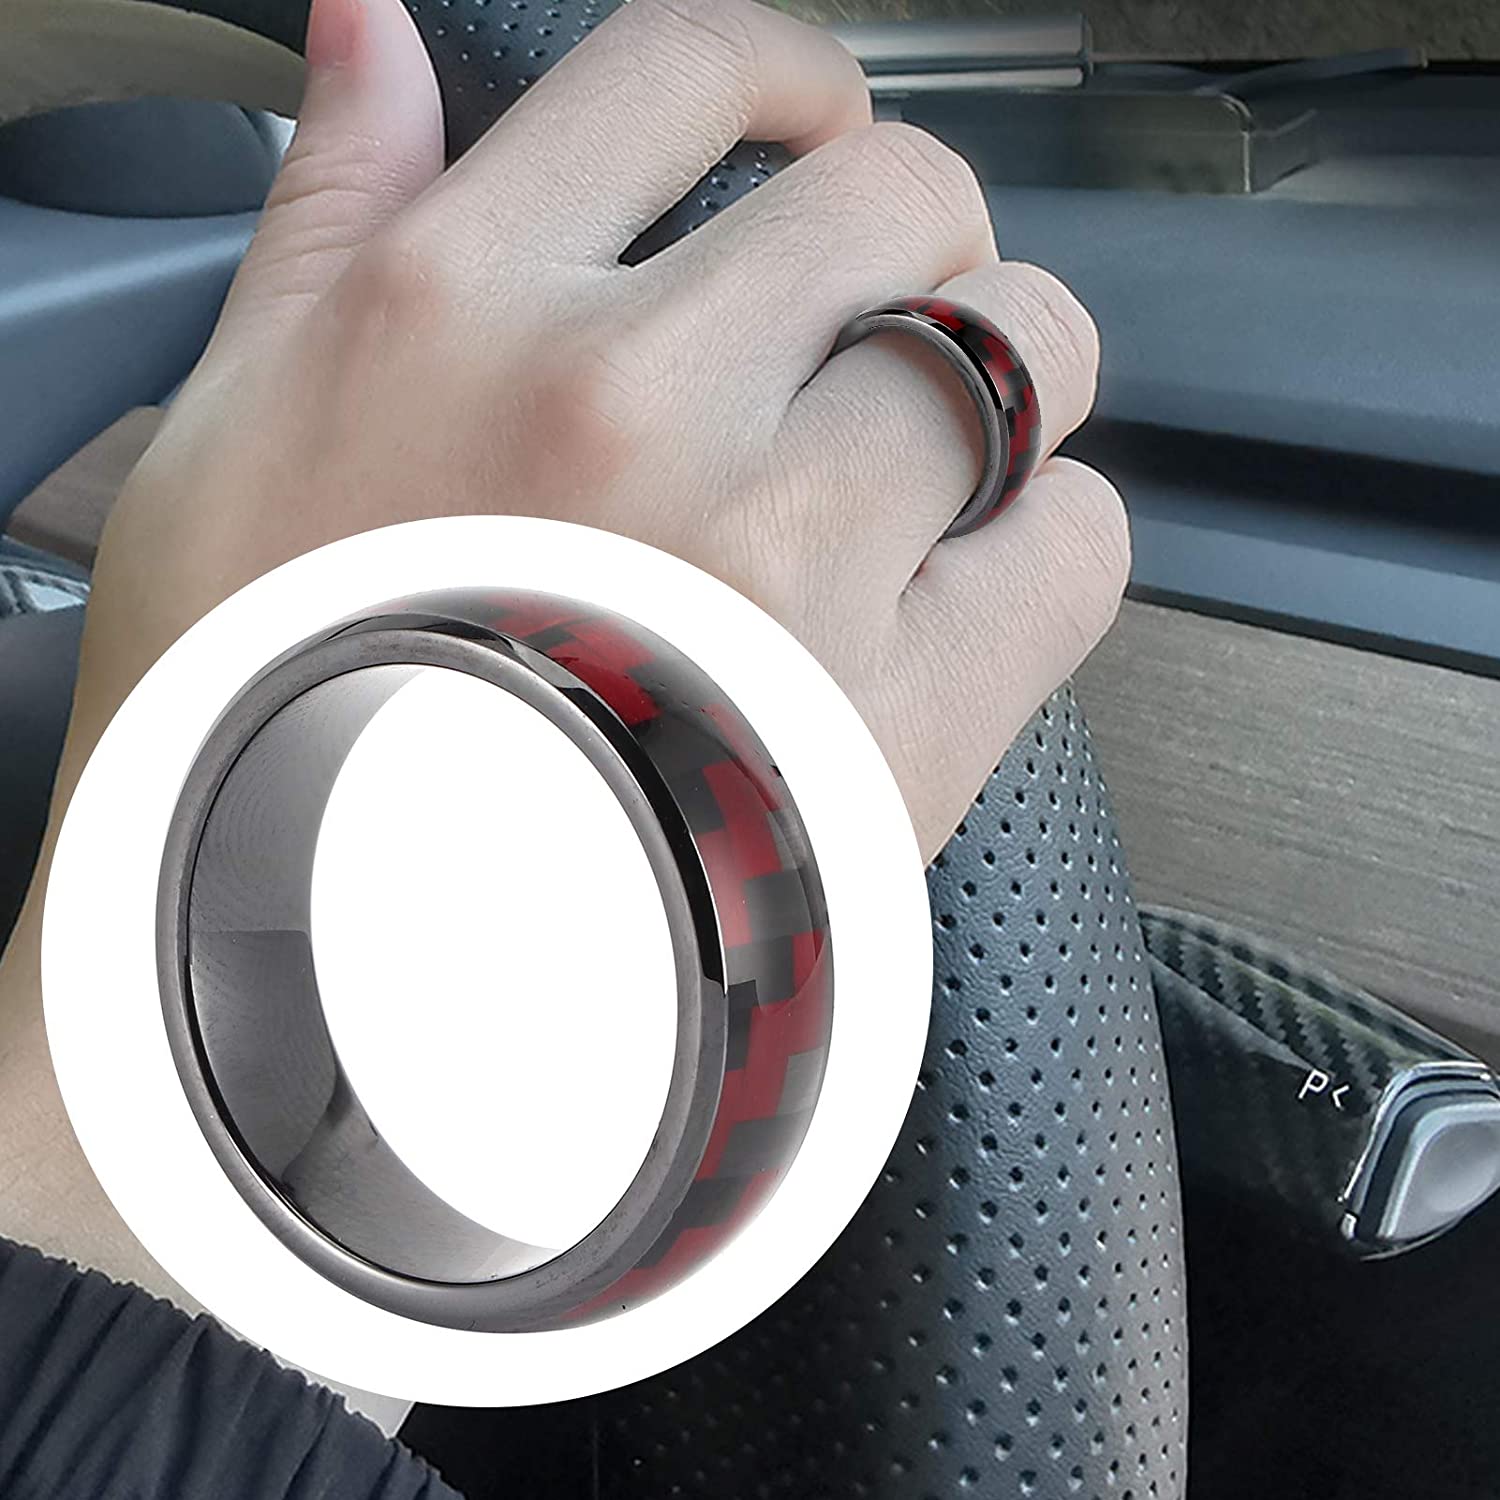 Smart Ring Key Fob, Tesla Model 3 & Y (S & X)